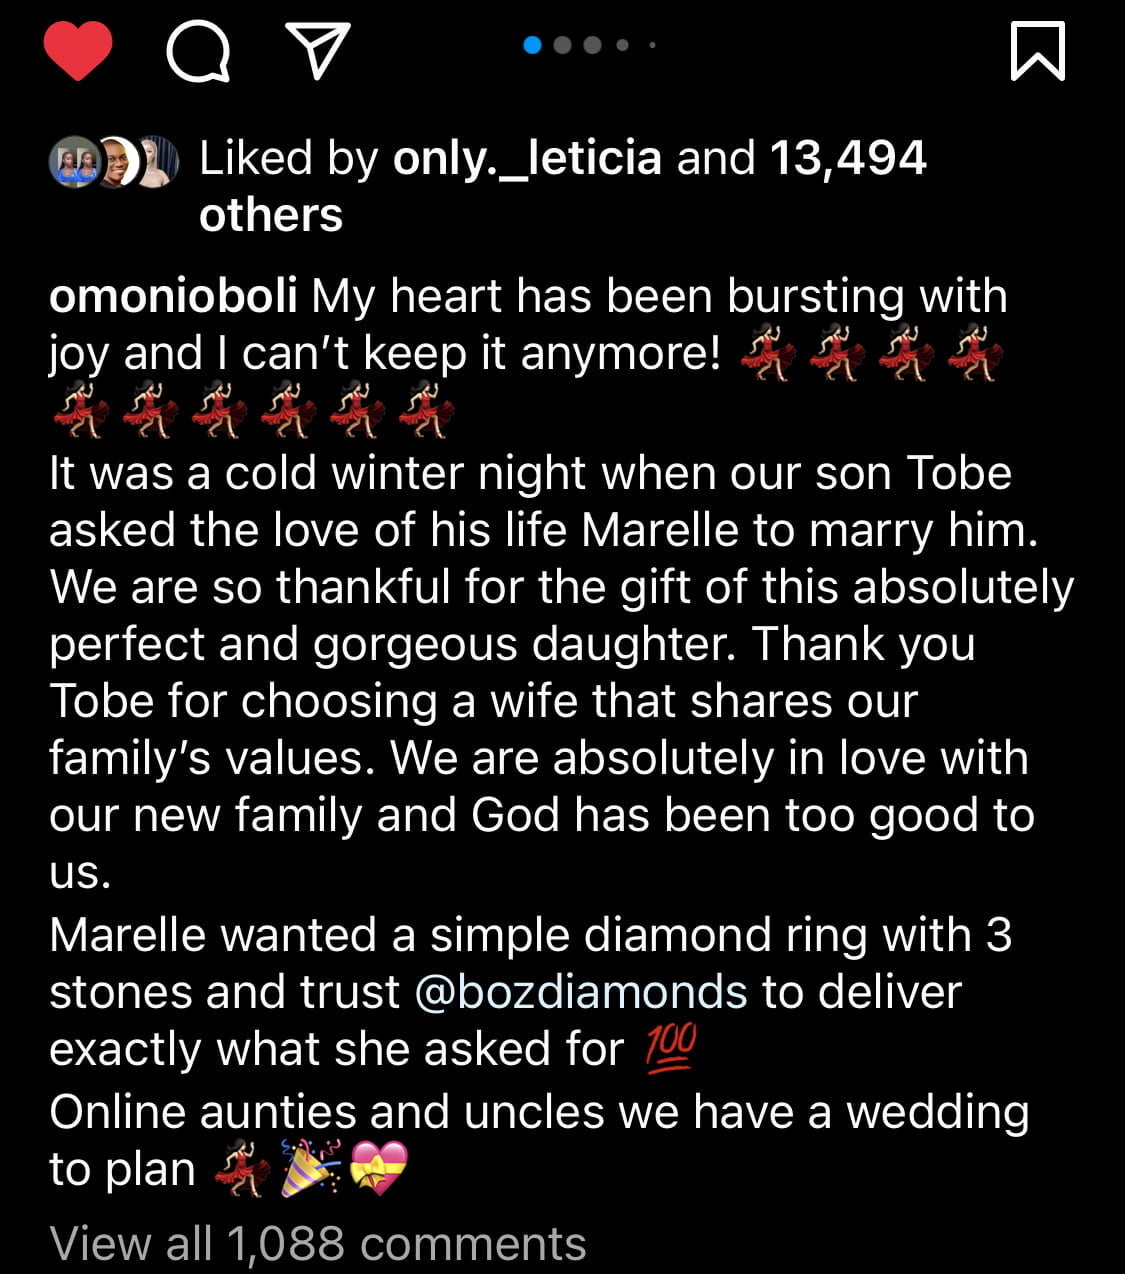 Omoni Oboli’s post celebrating her son’s engagement.